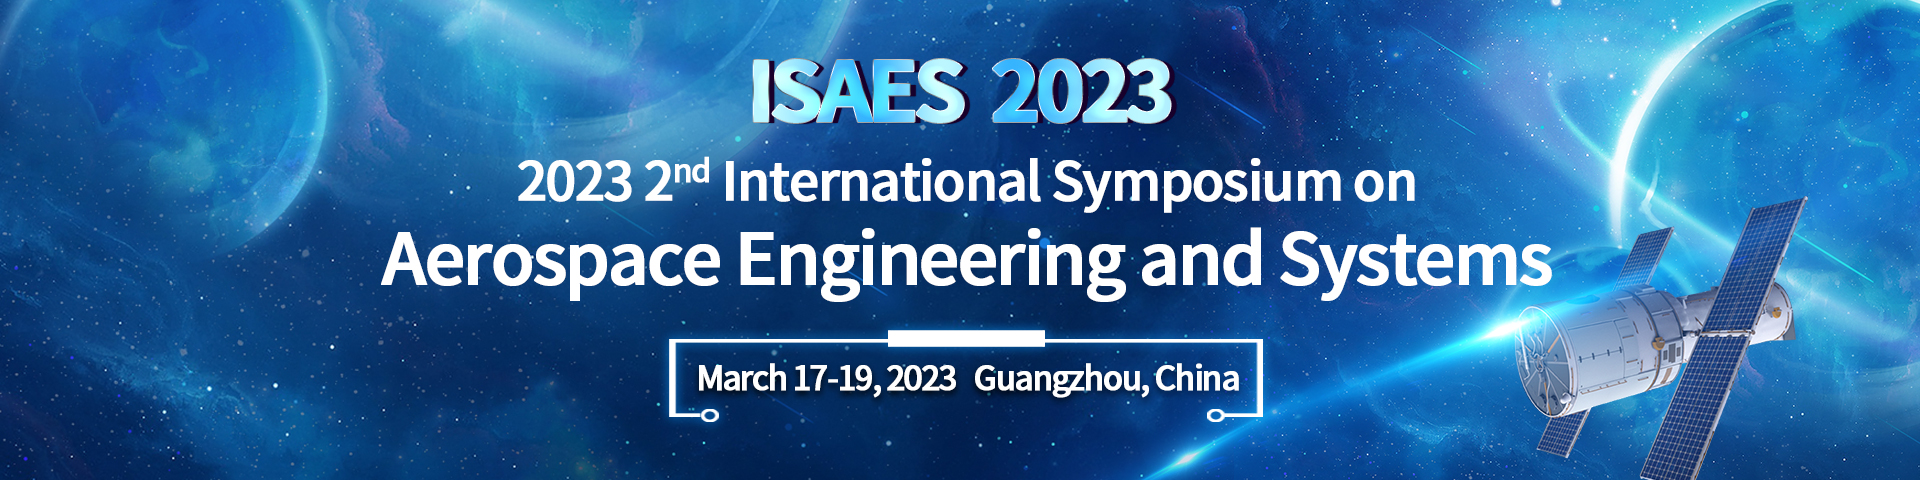 2023 2nd International Symposium on Aerospace Engineering and Systems (ISAES 2023), Guangzhou, Guangdong, China